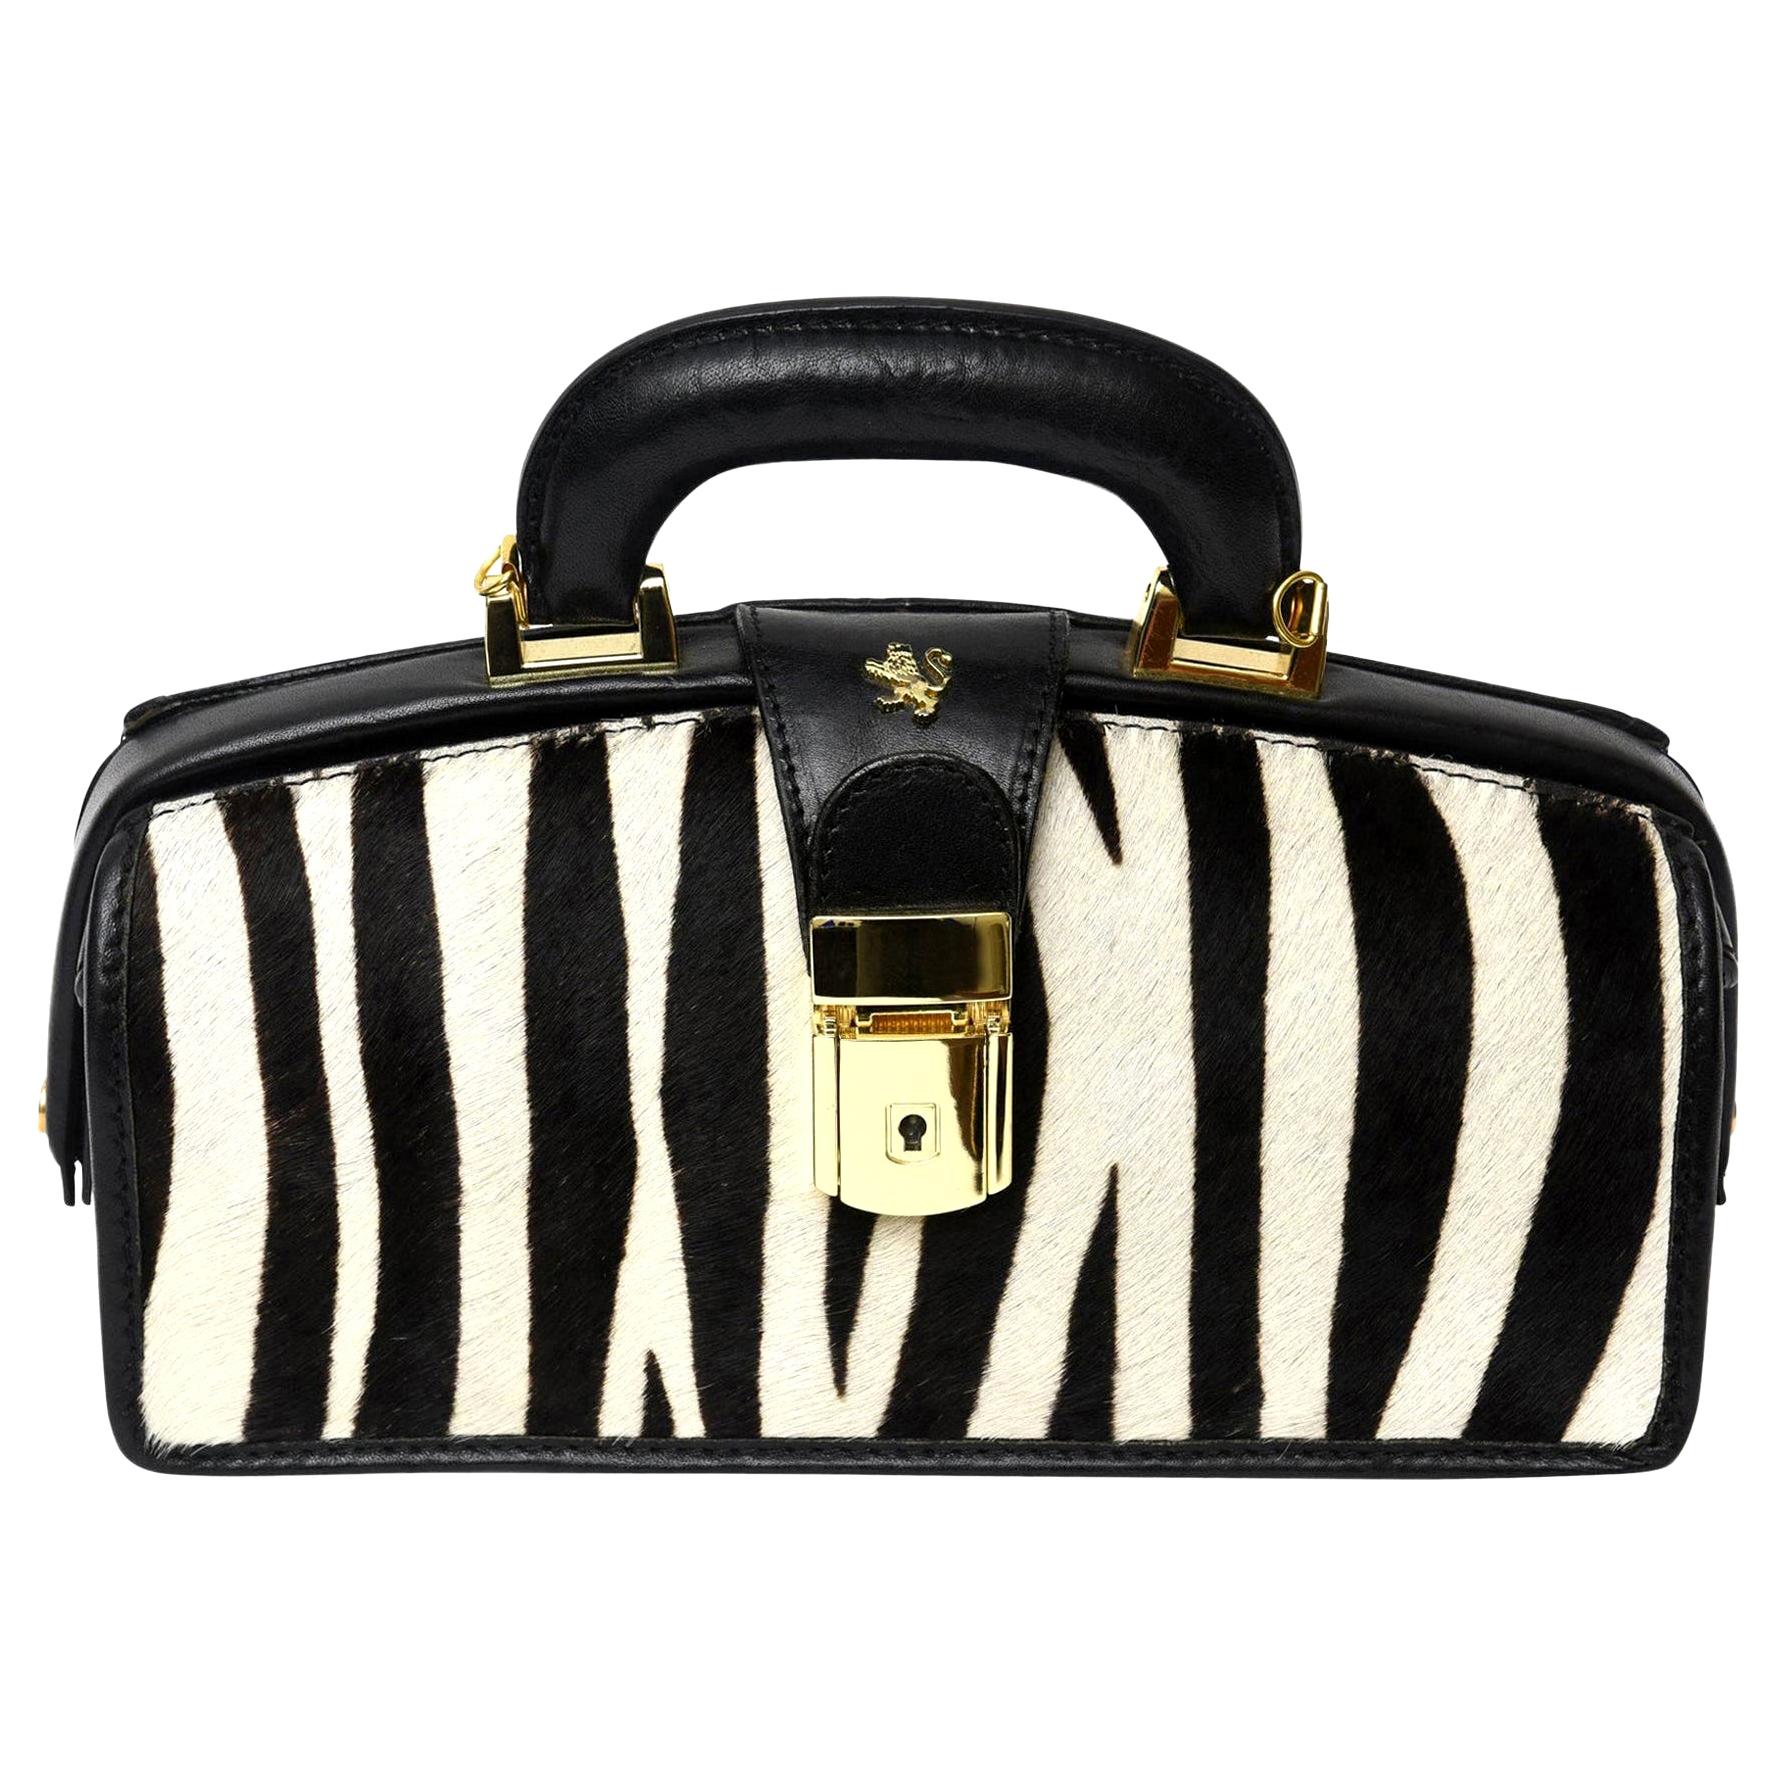 Pratesi Zebra Pony Hair & Black Leather Handbag with Gold Plate Italian Vintage